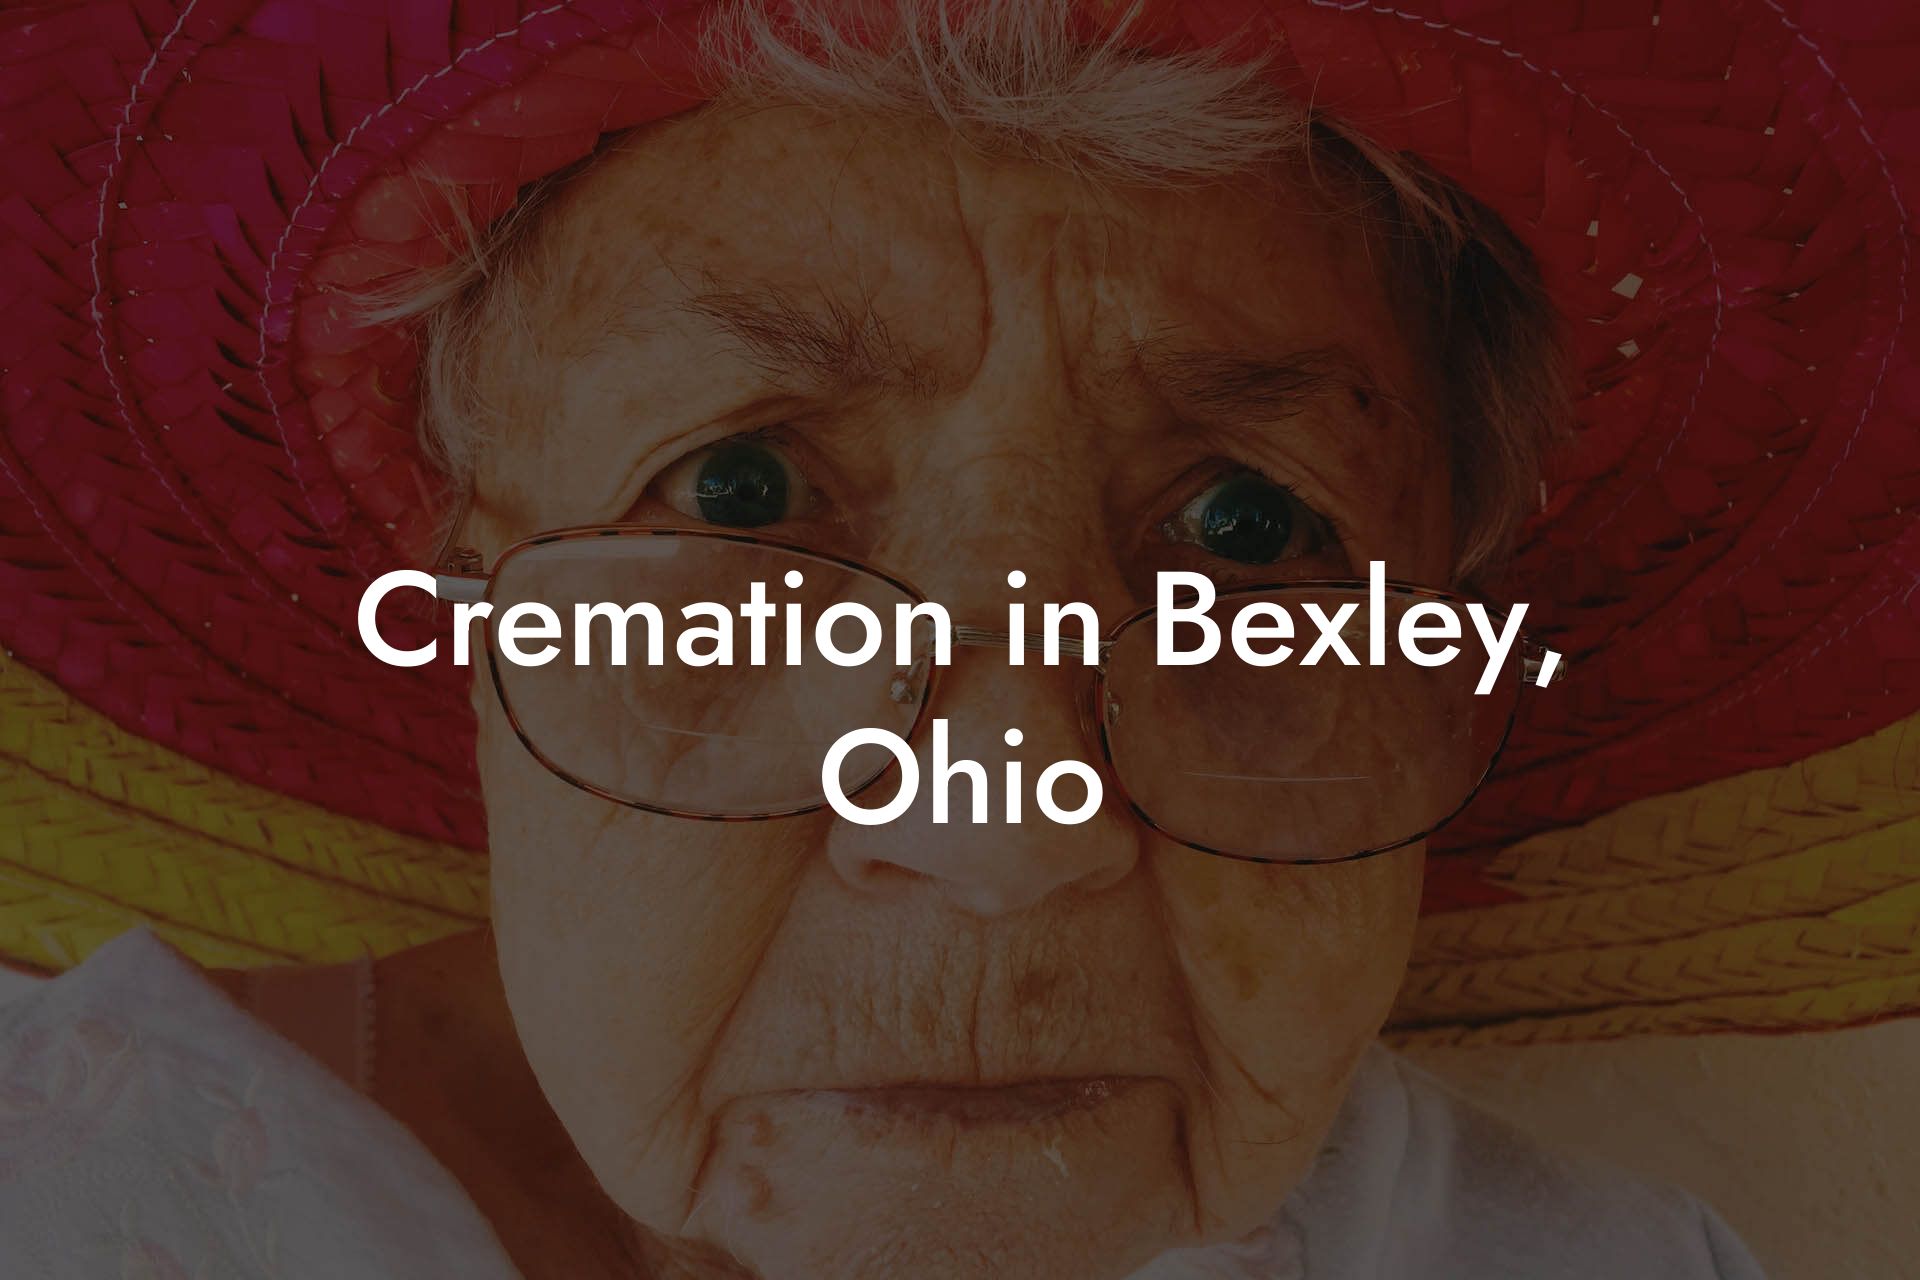 Cremation in Bexley, Ohio